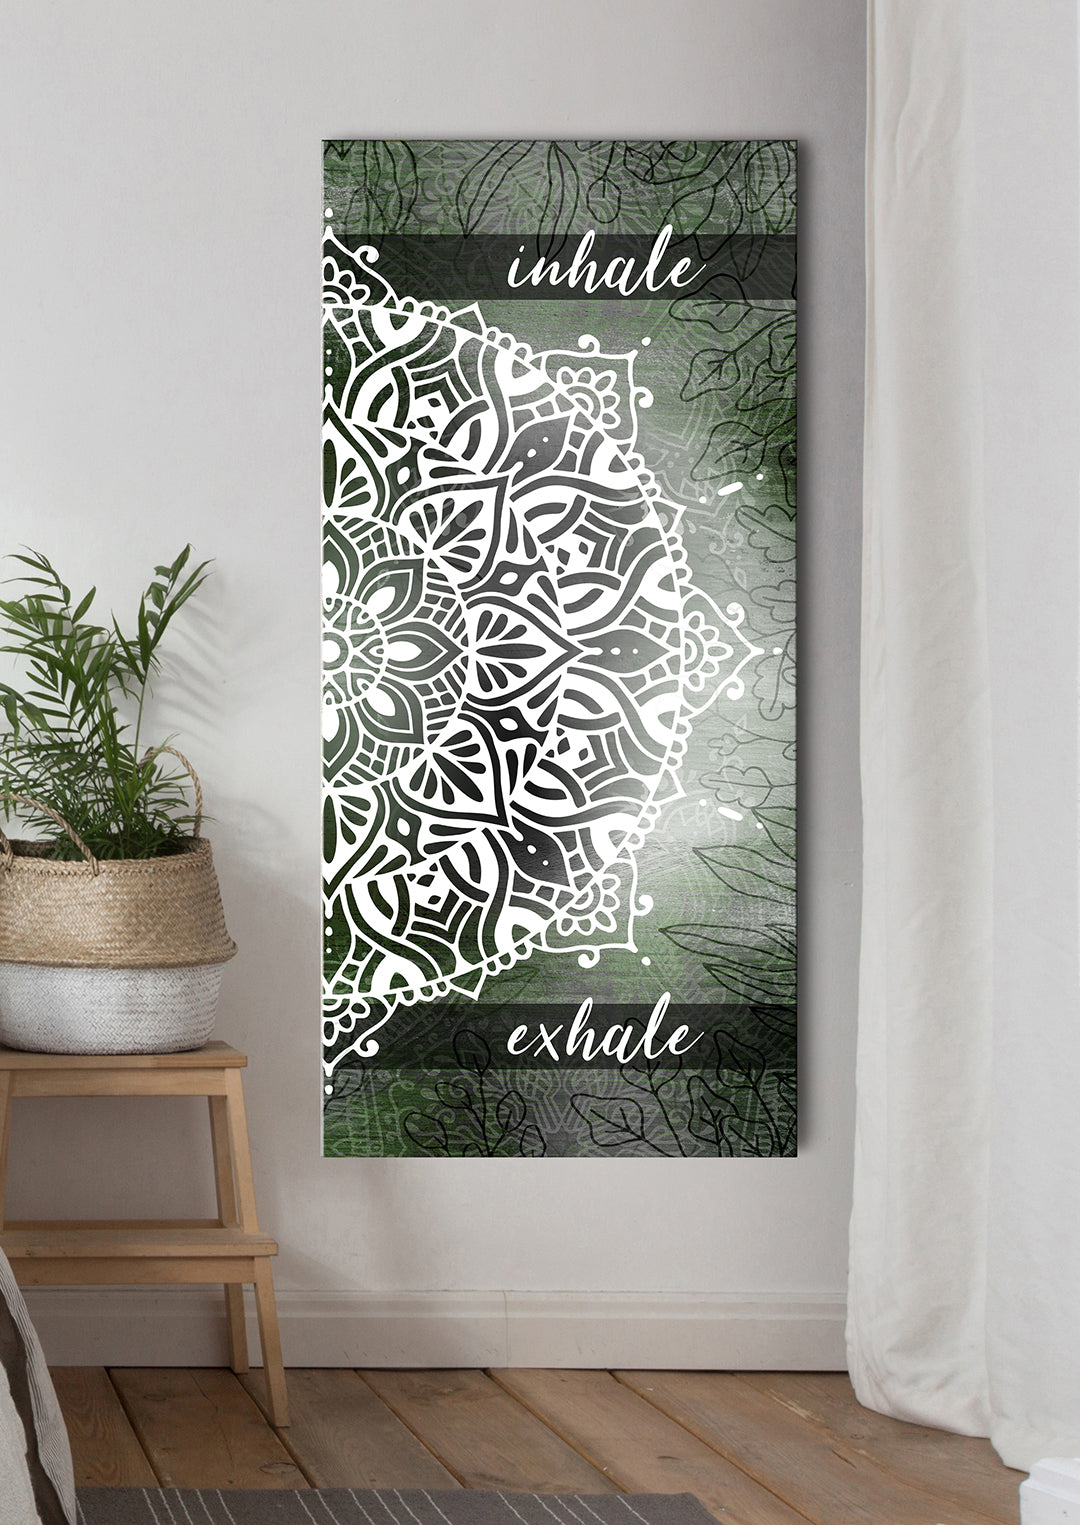 Ready Sense for Boho To Hang) V3 Exhale Decor - Home Inhale (Wood Frame Art: Wall